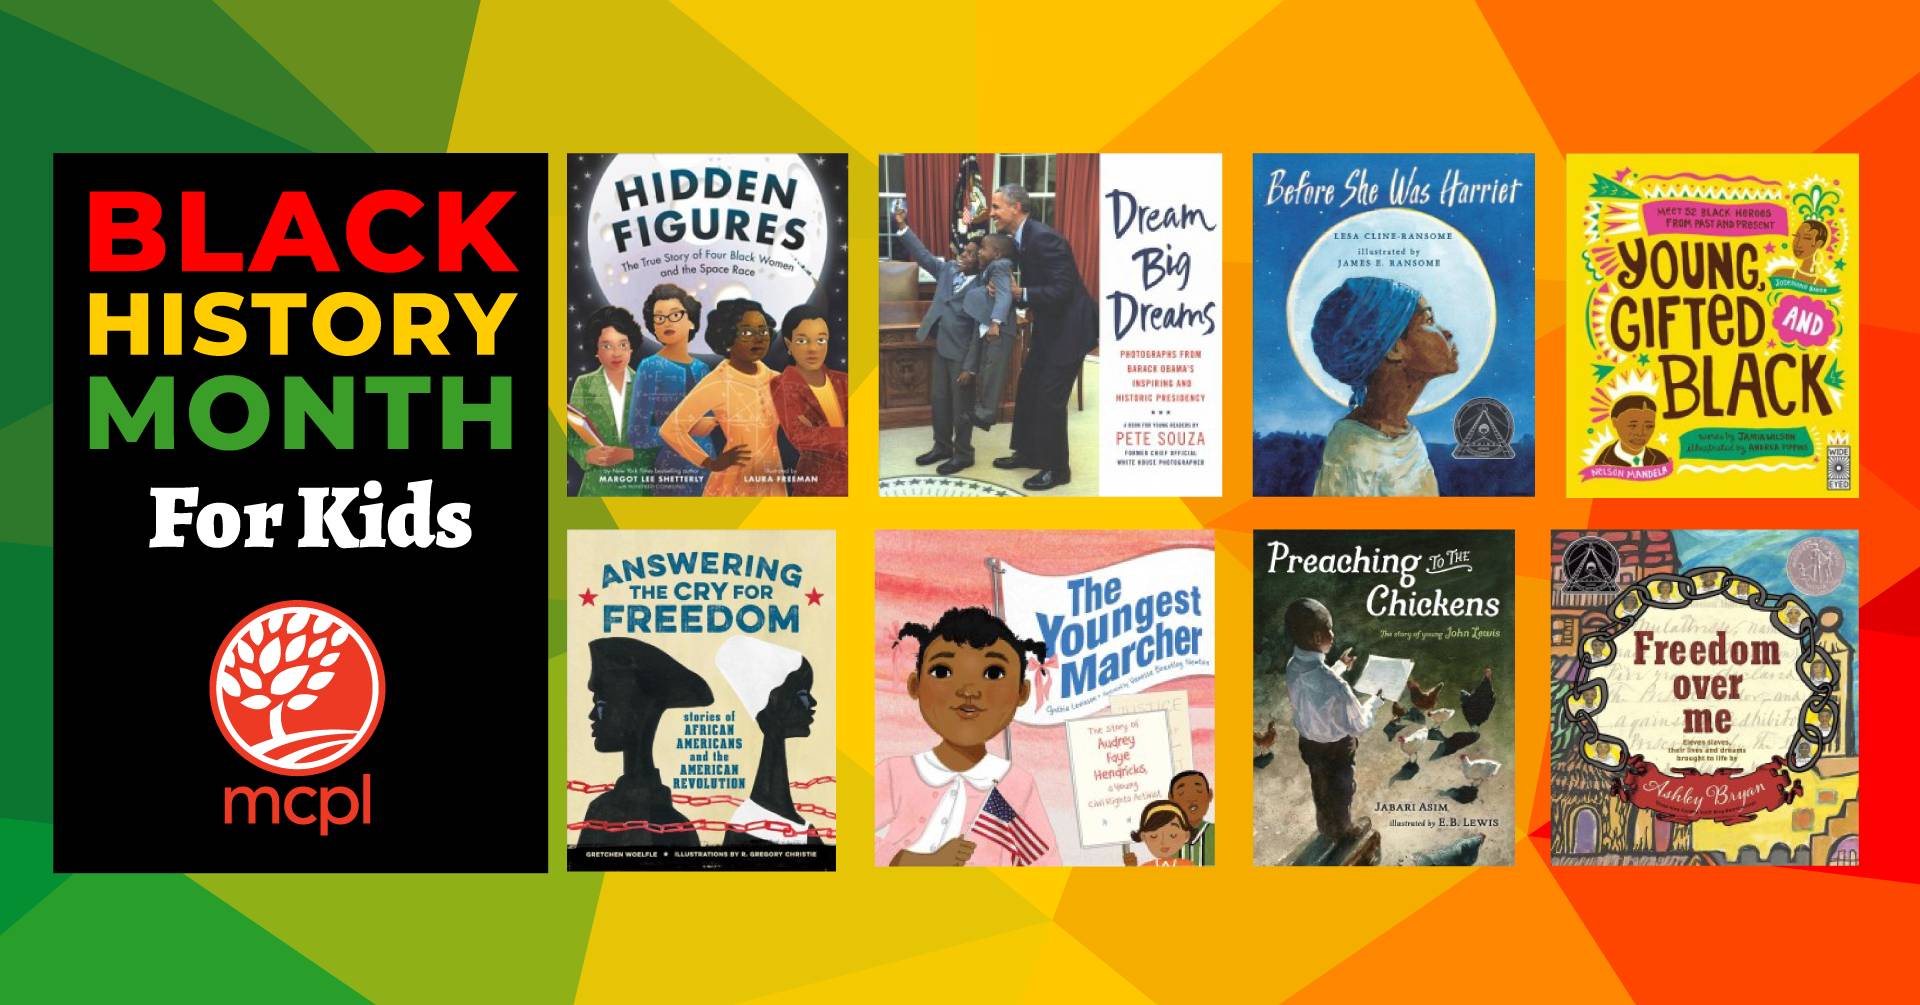 Black History Month for Kids